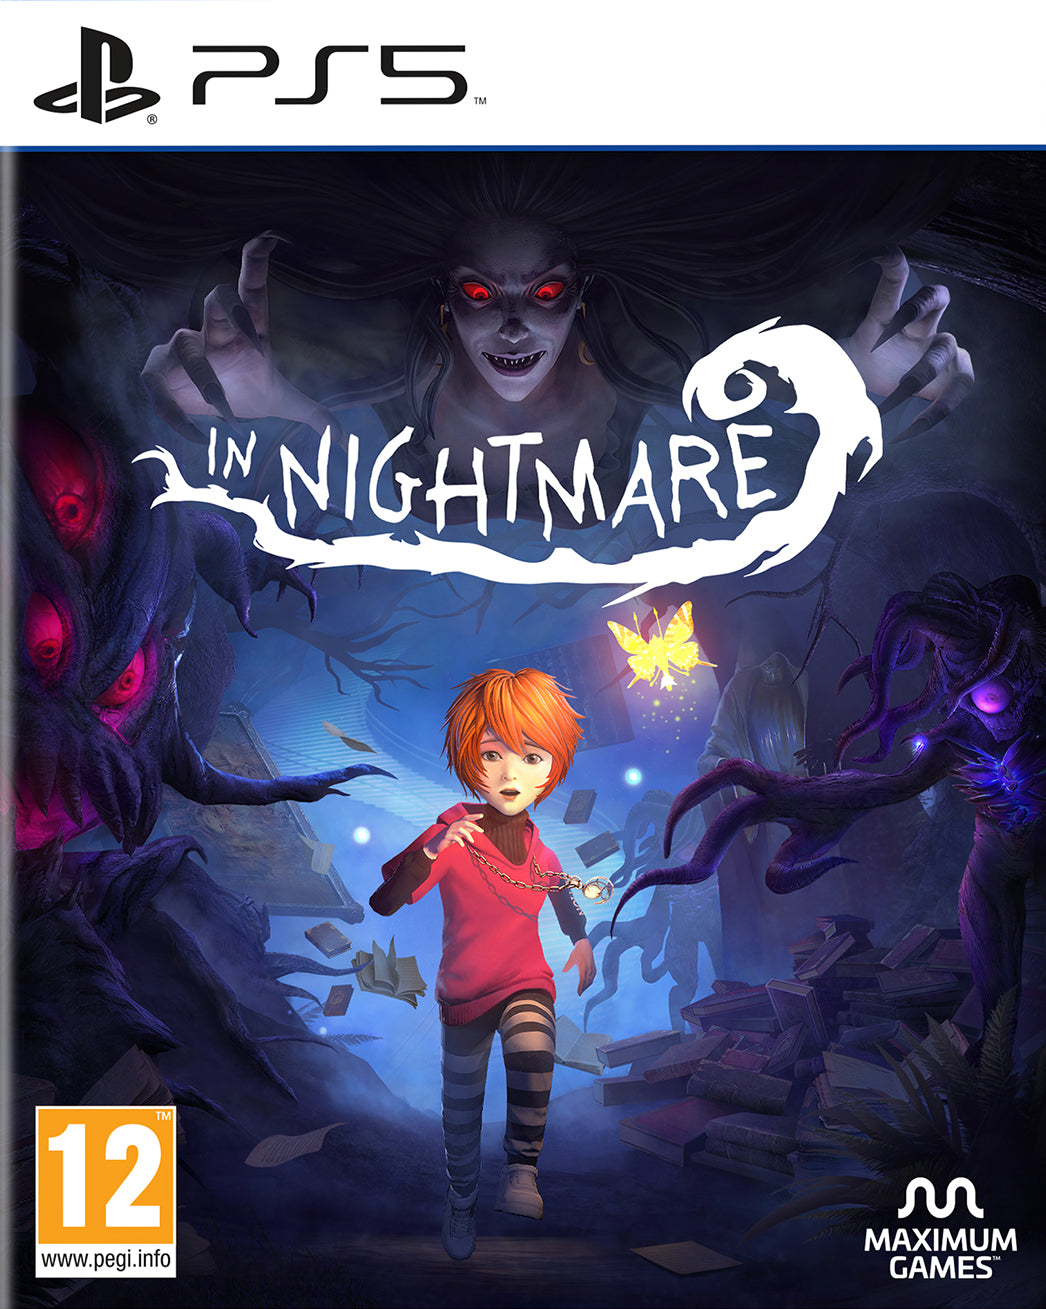 in Nightmare (PS5) (New)